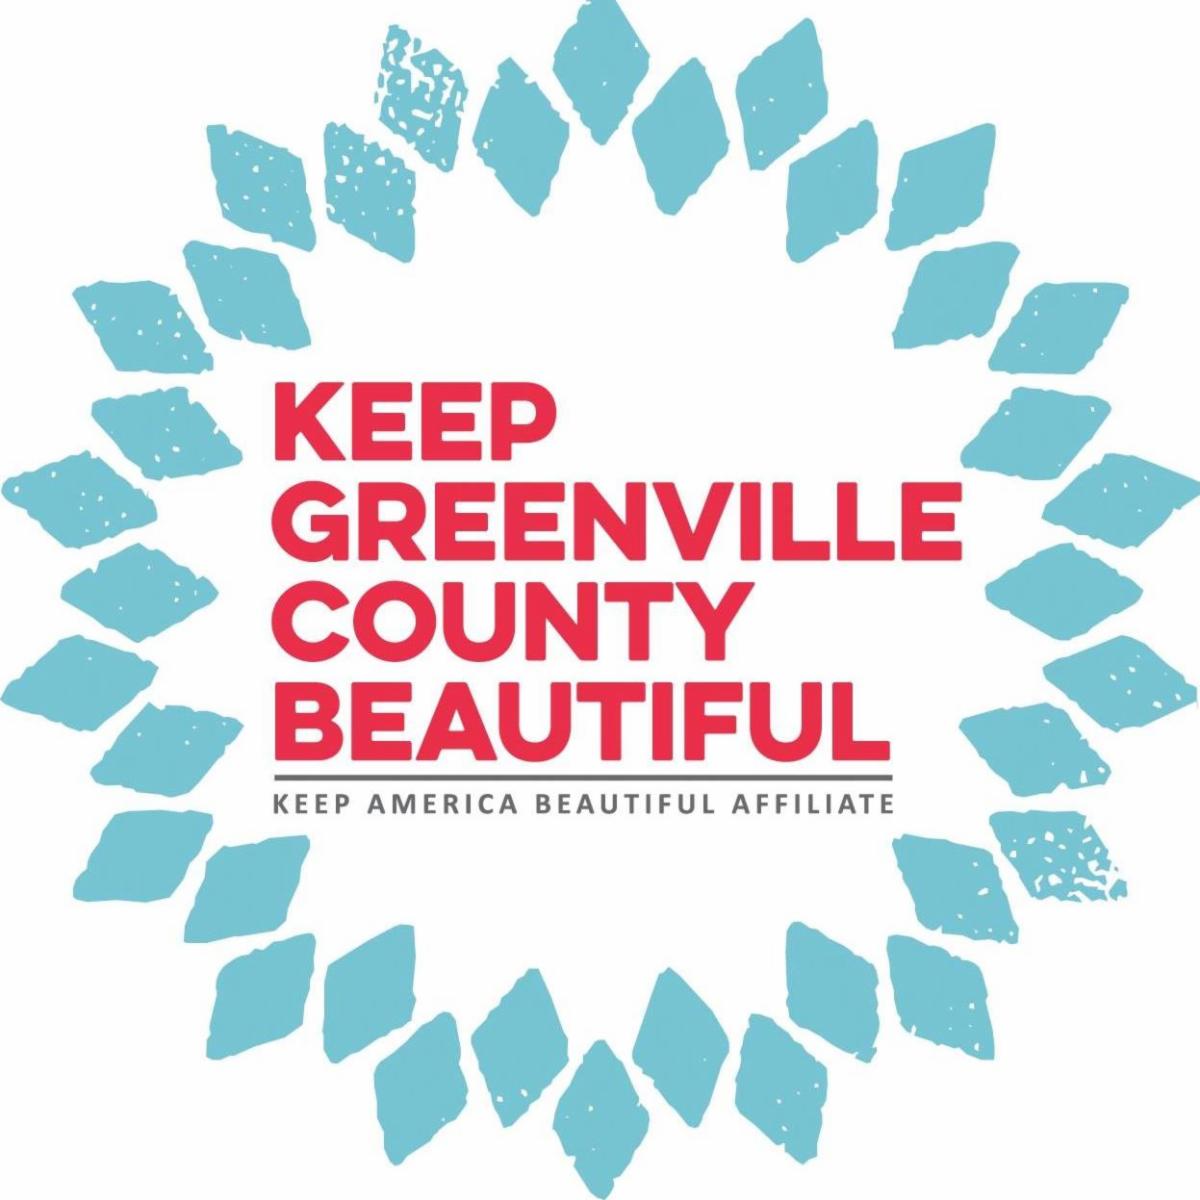 Keep Greenville County Beautiful